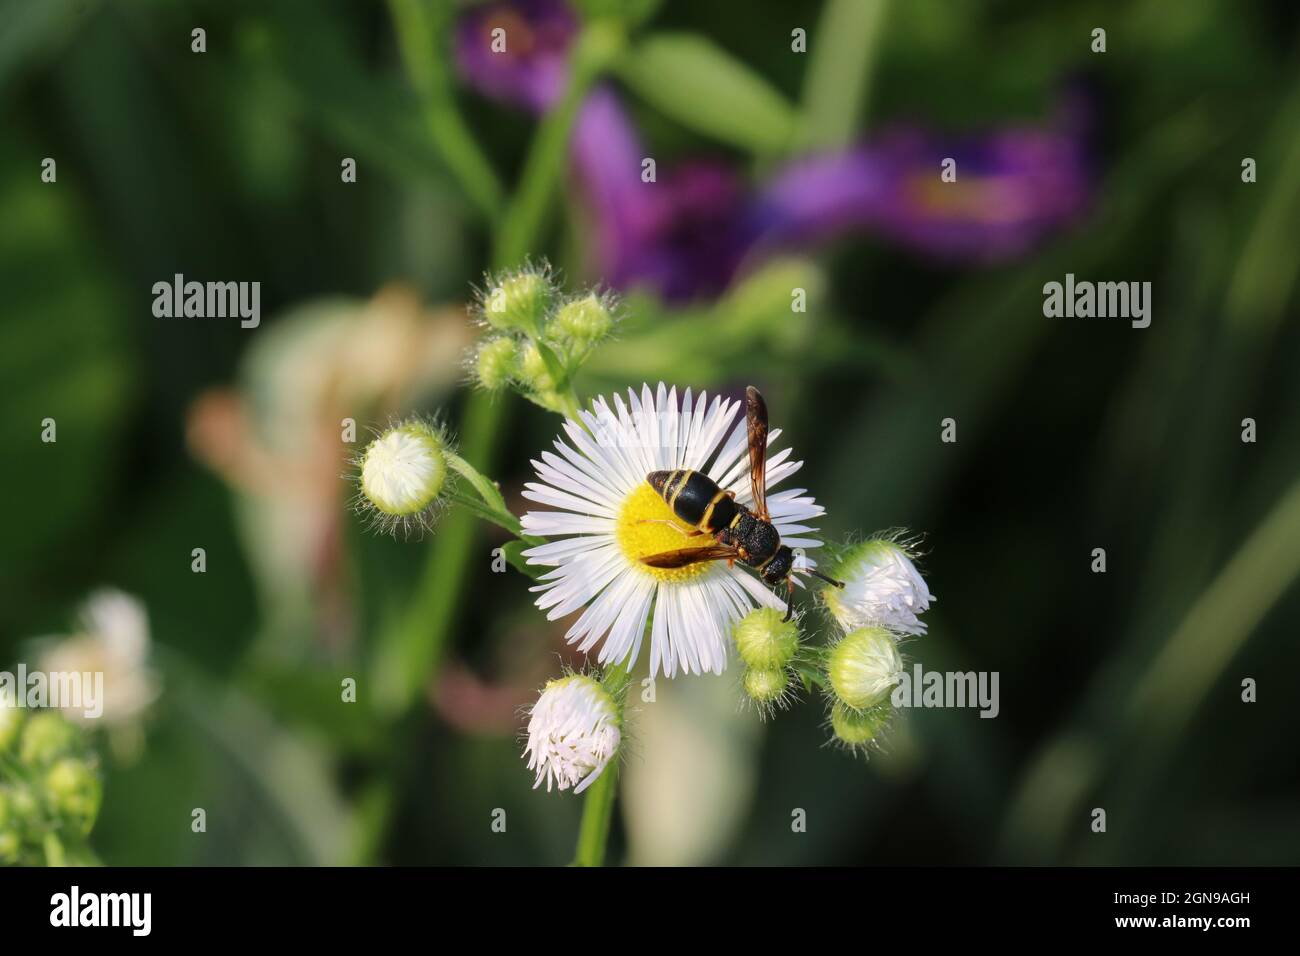 A striped potter wasp (Eumenidae) searches for nectar on a daisy fleabane (Erigeron strigosus). Stock Photo